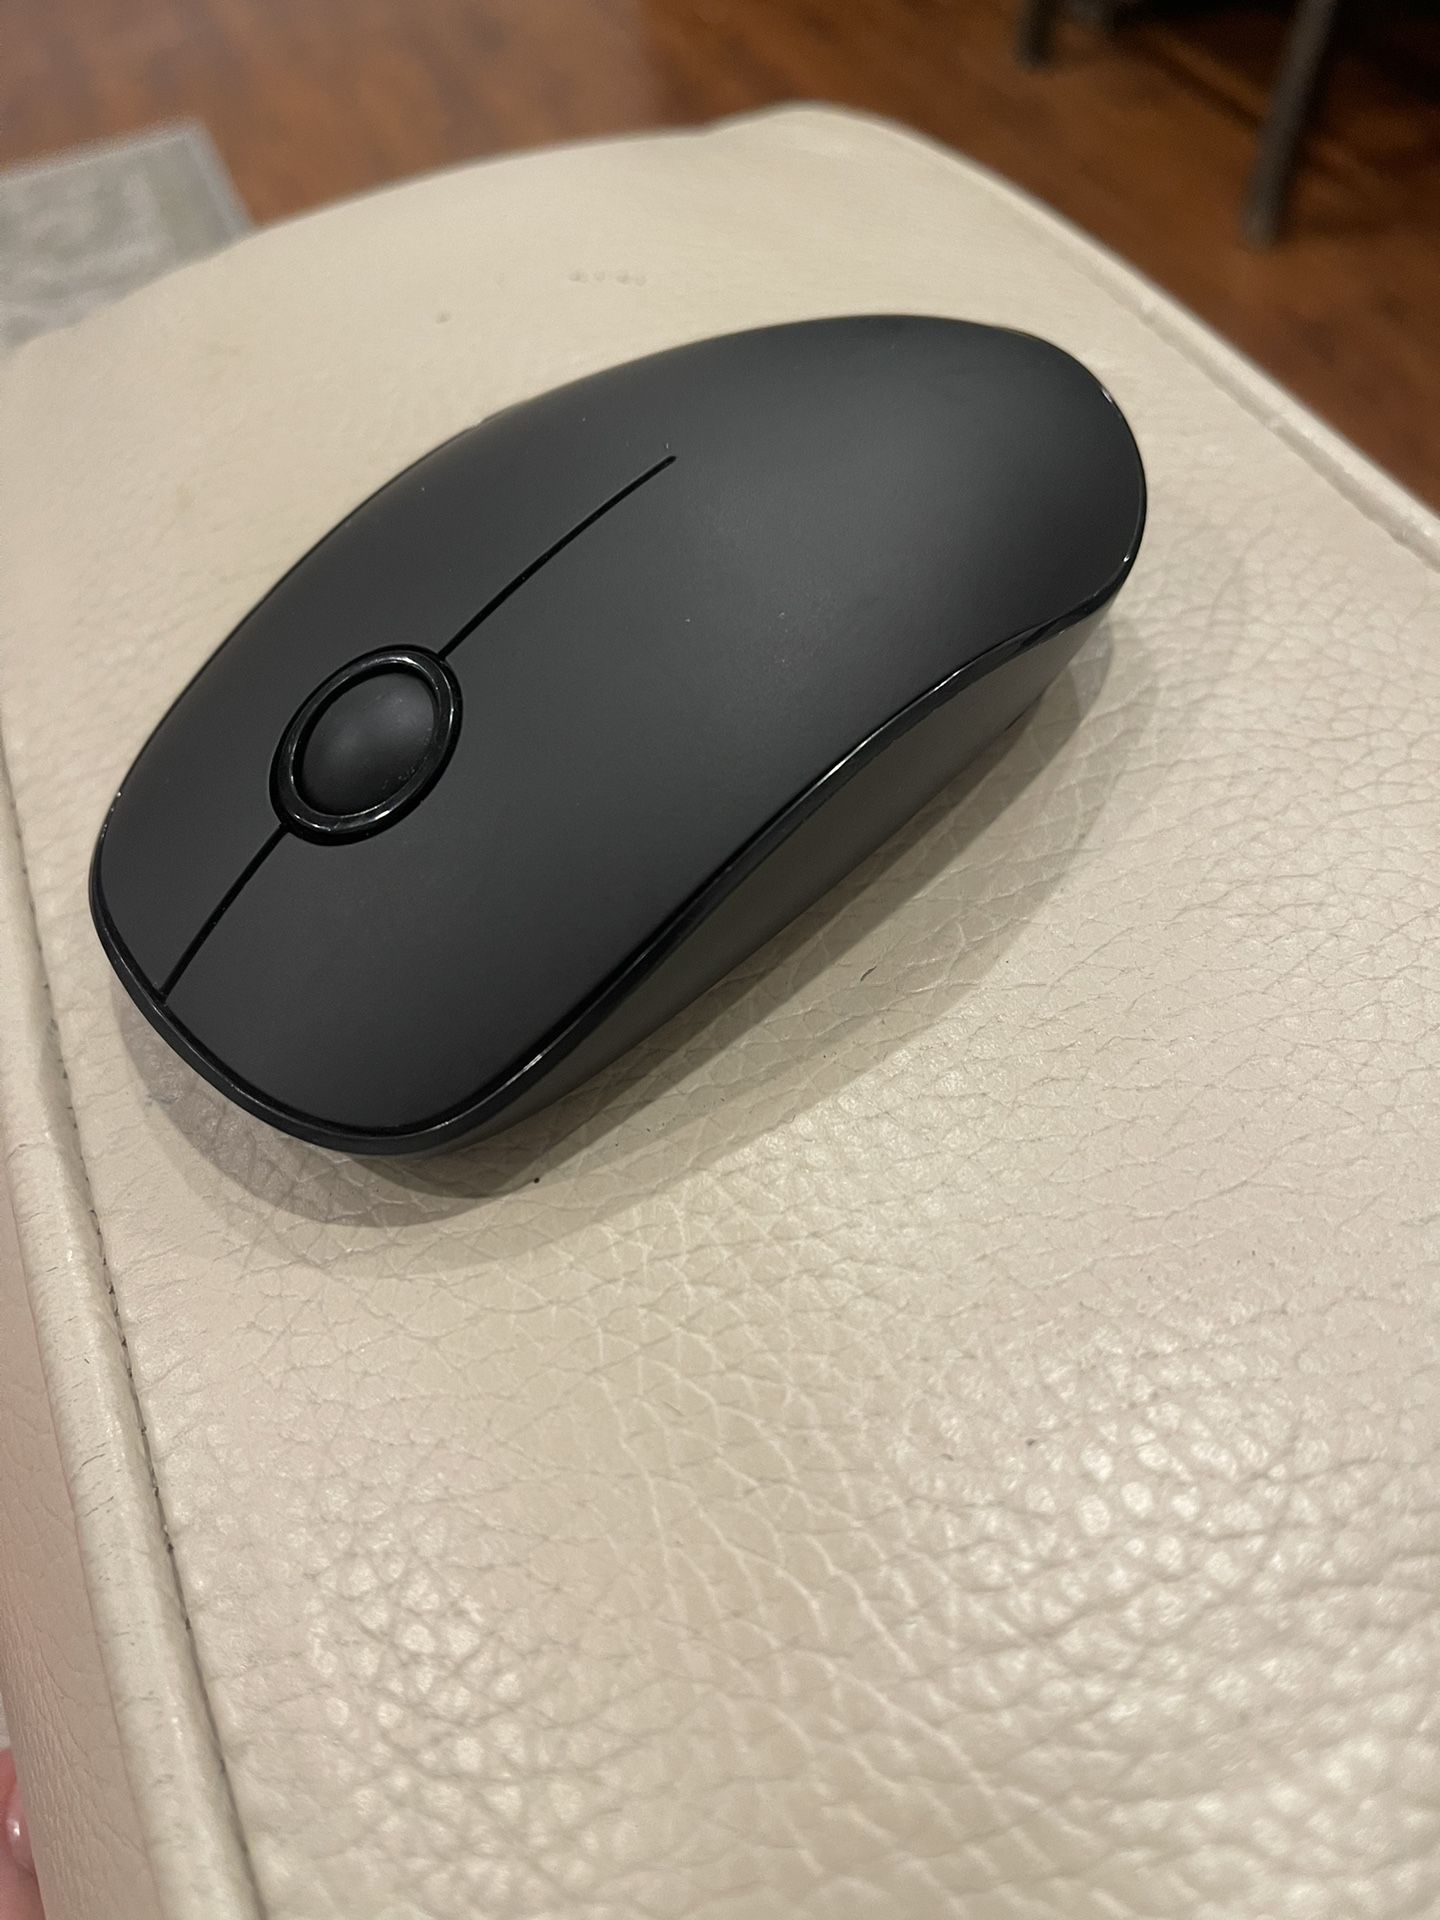 wireless mouse model v8